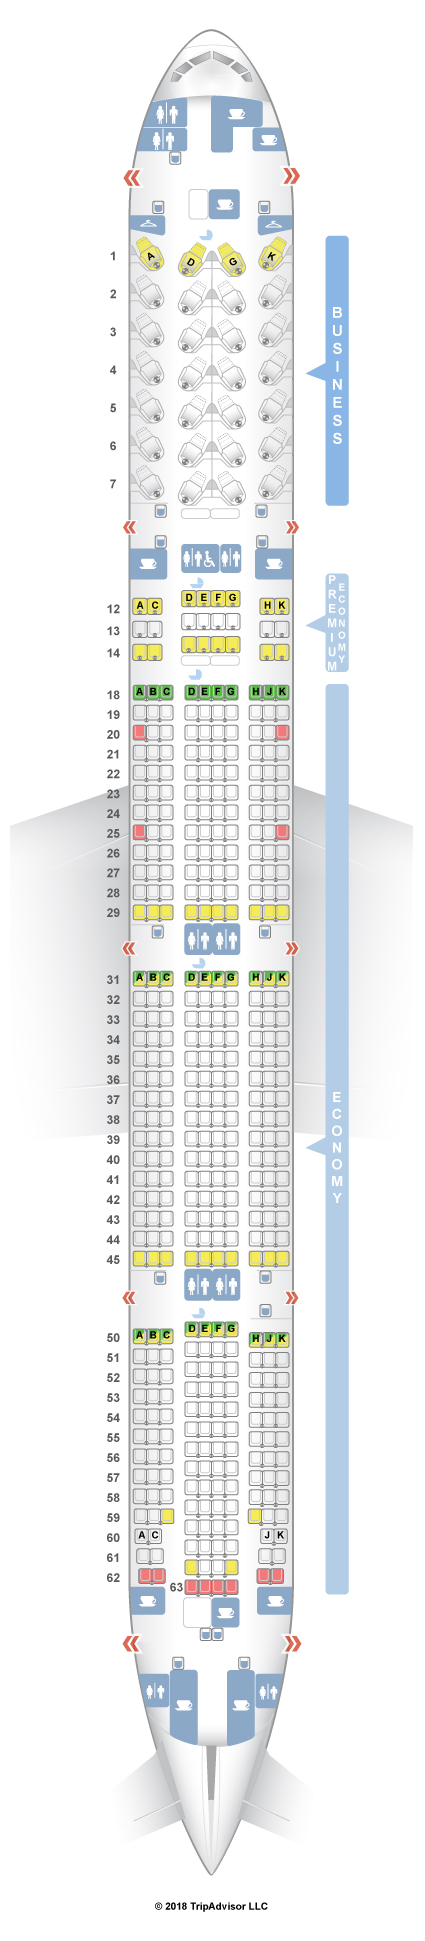 SeatGuru Seat Map Air Canada Boeing 777-300ER (77W) Three Class V2